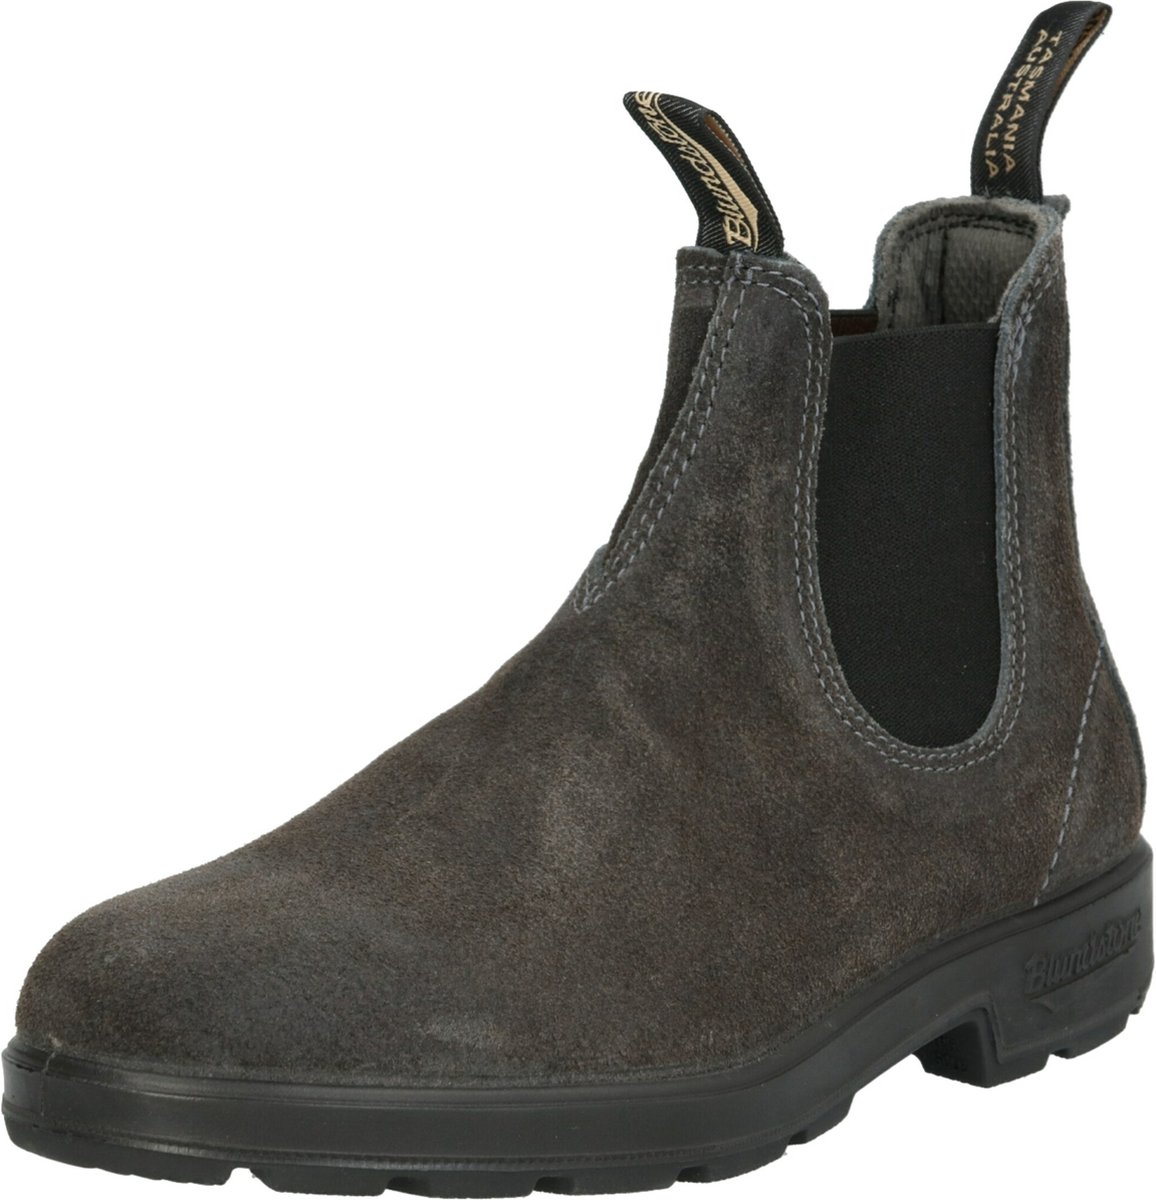 Blundstone Stiefel Boots #1910 Wax Suede (500 Series) Steel Grey-9UK